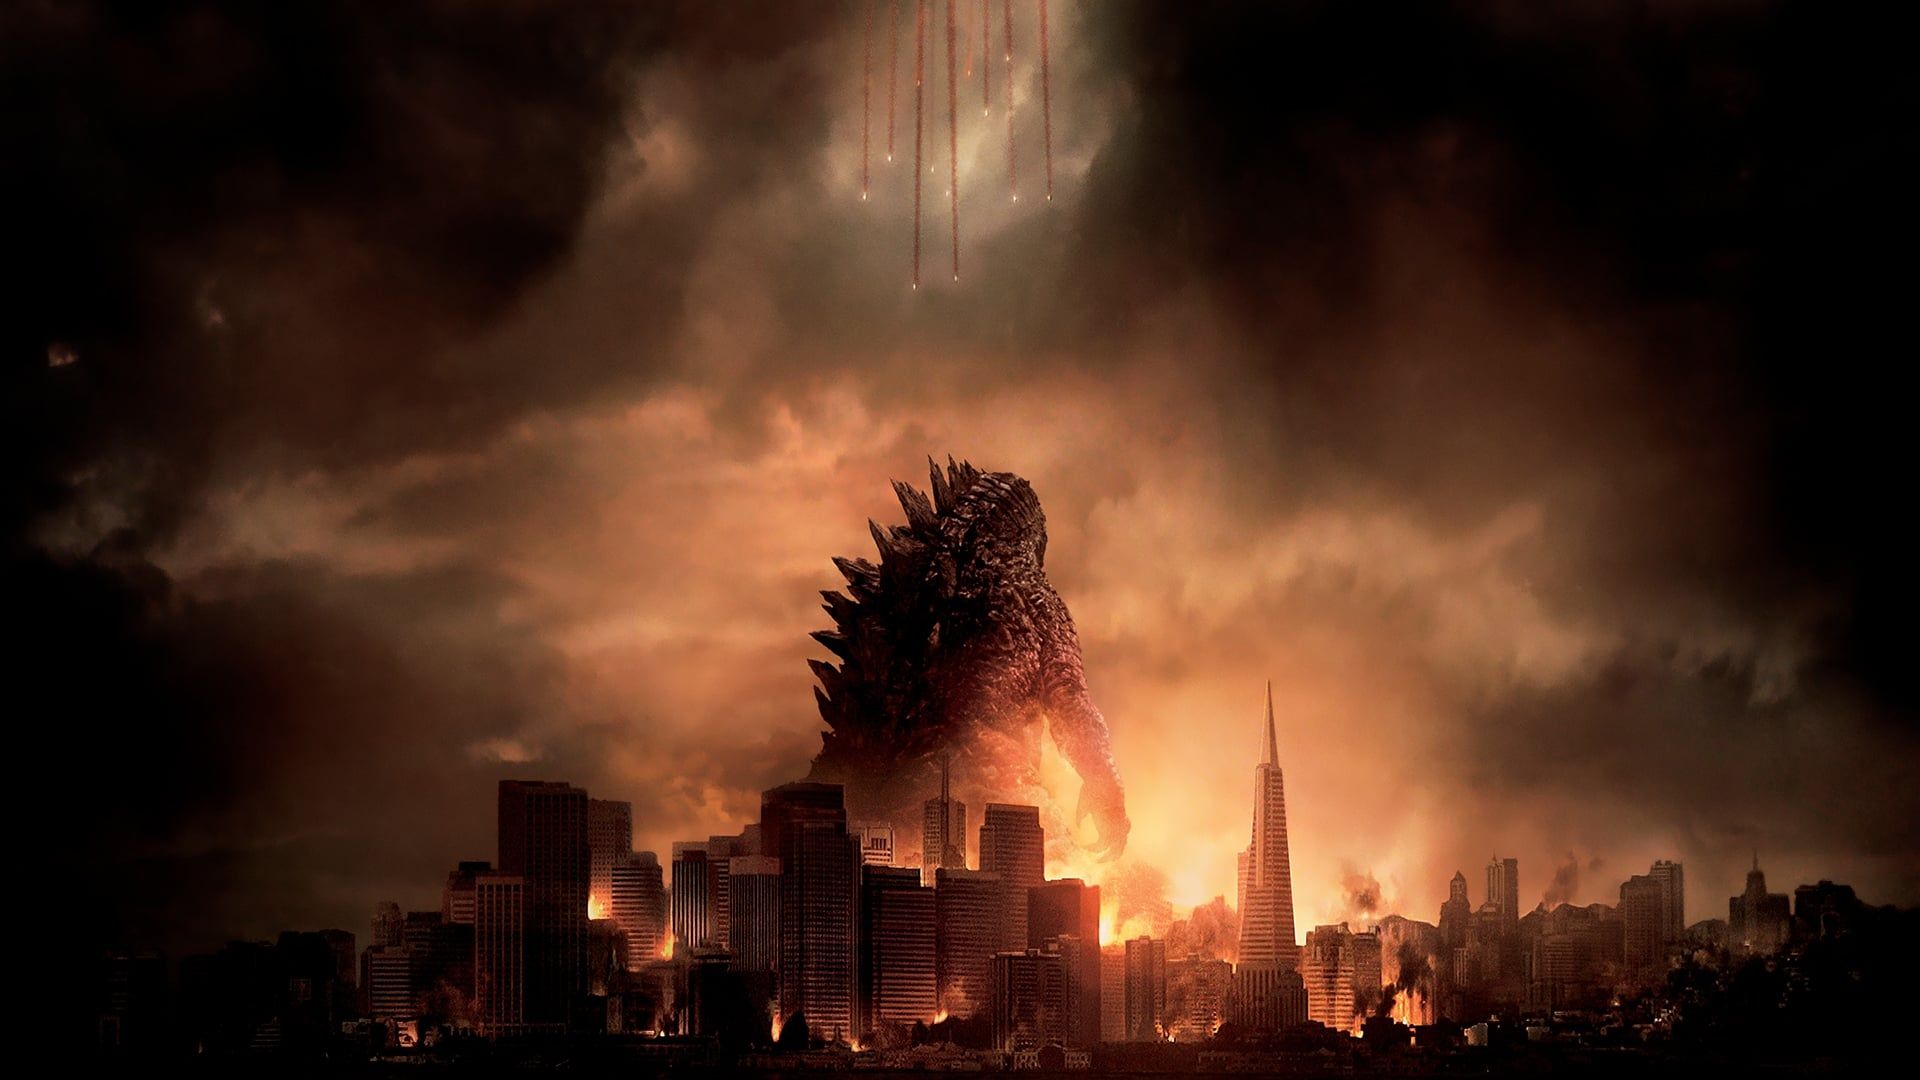 Godzilla Backdrop